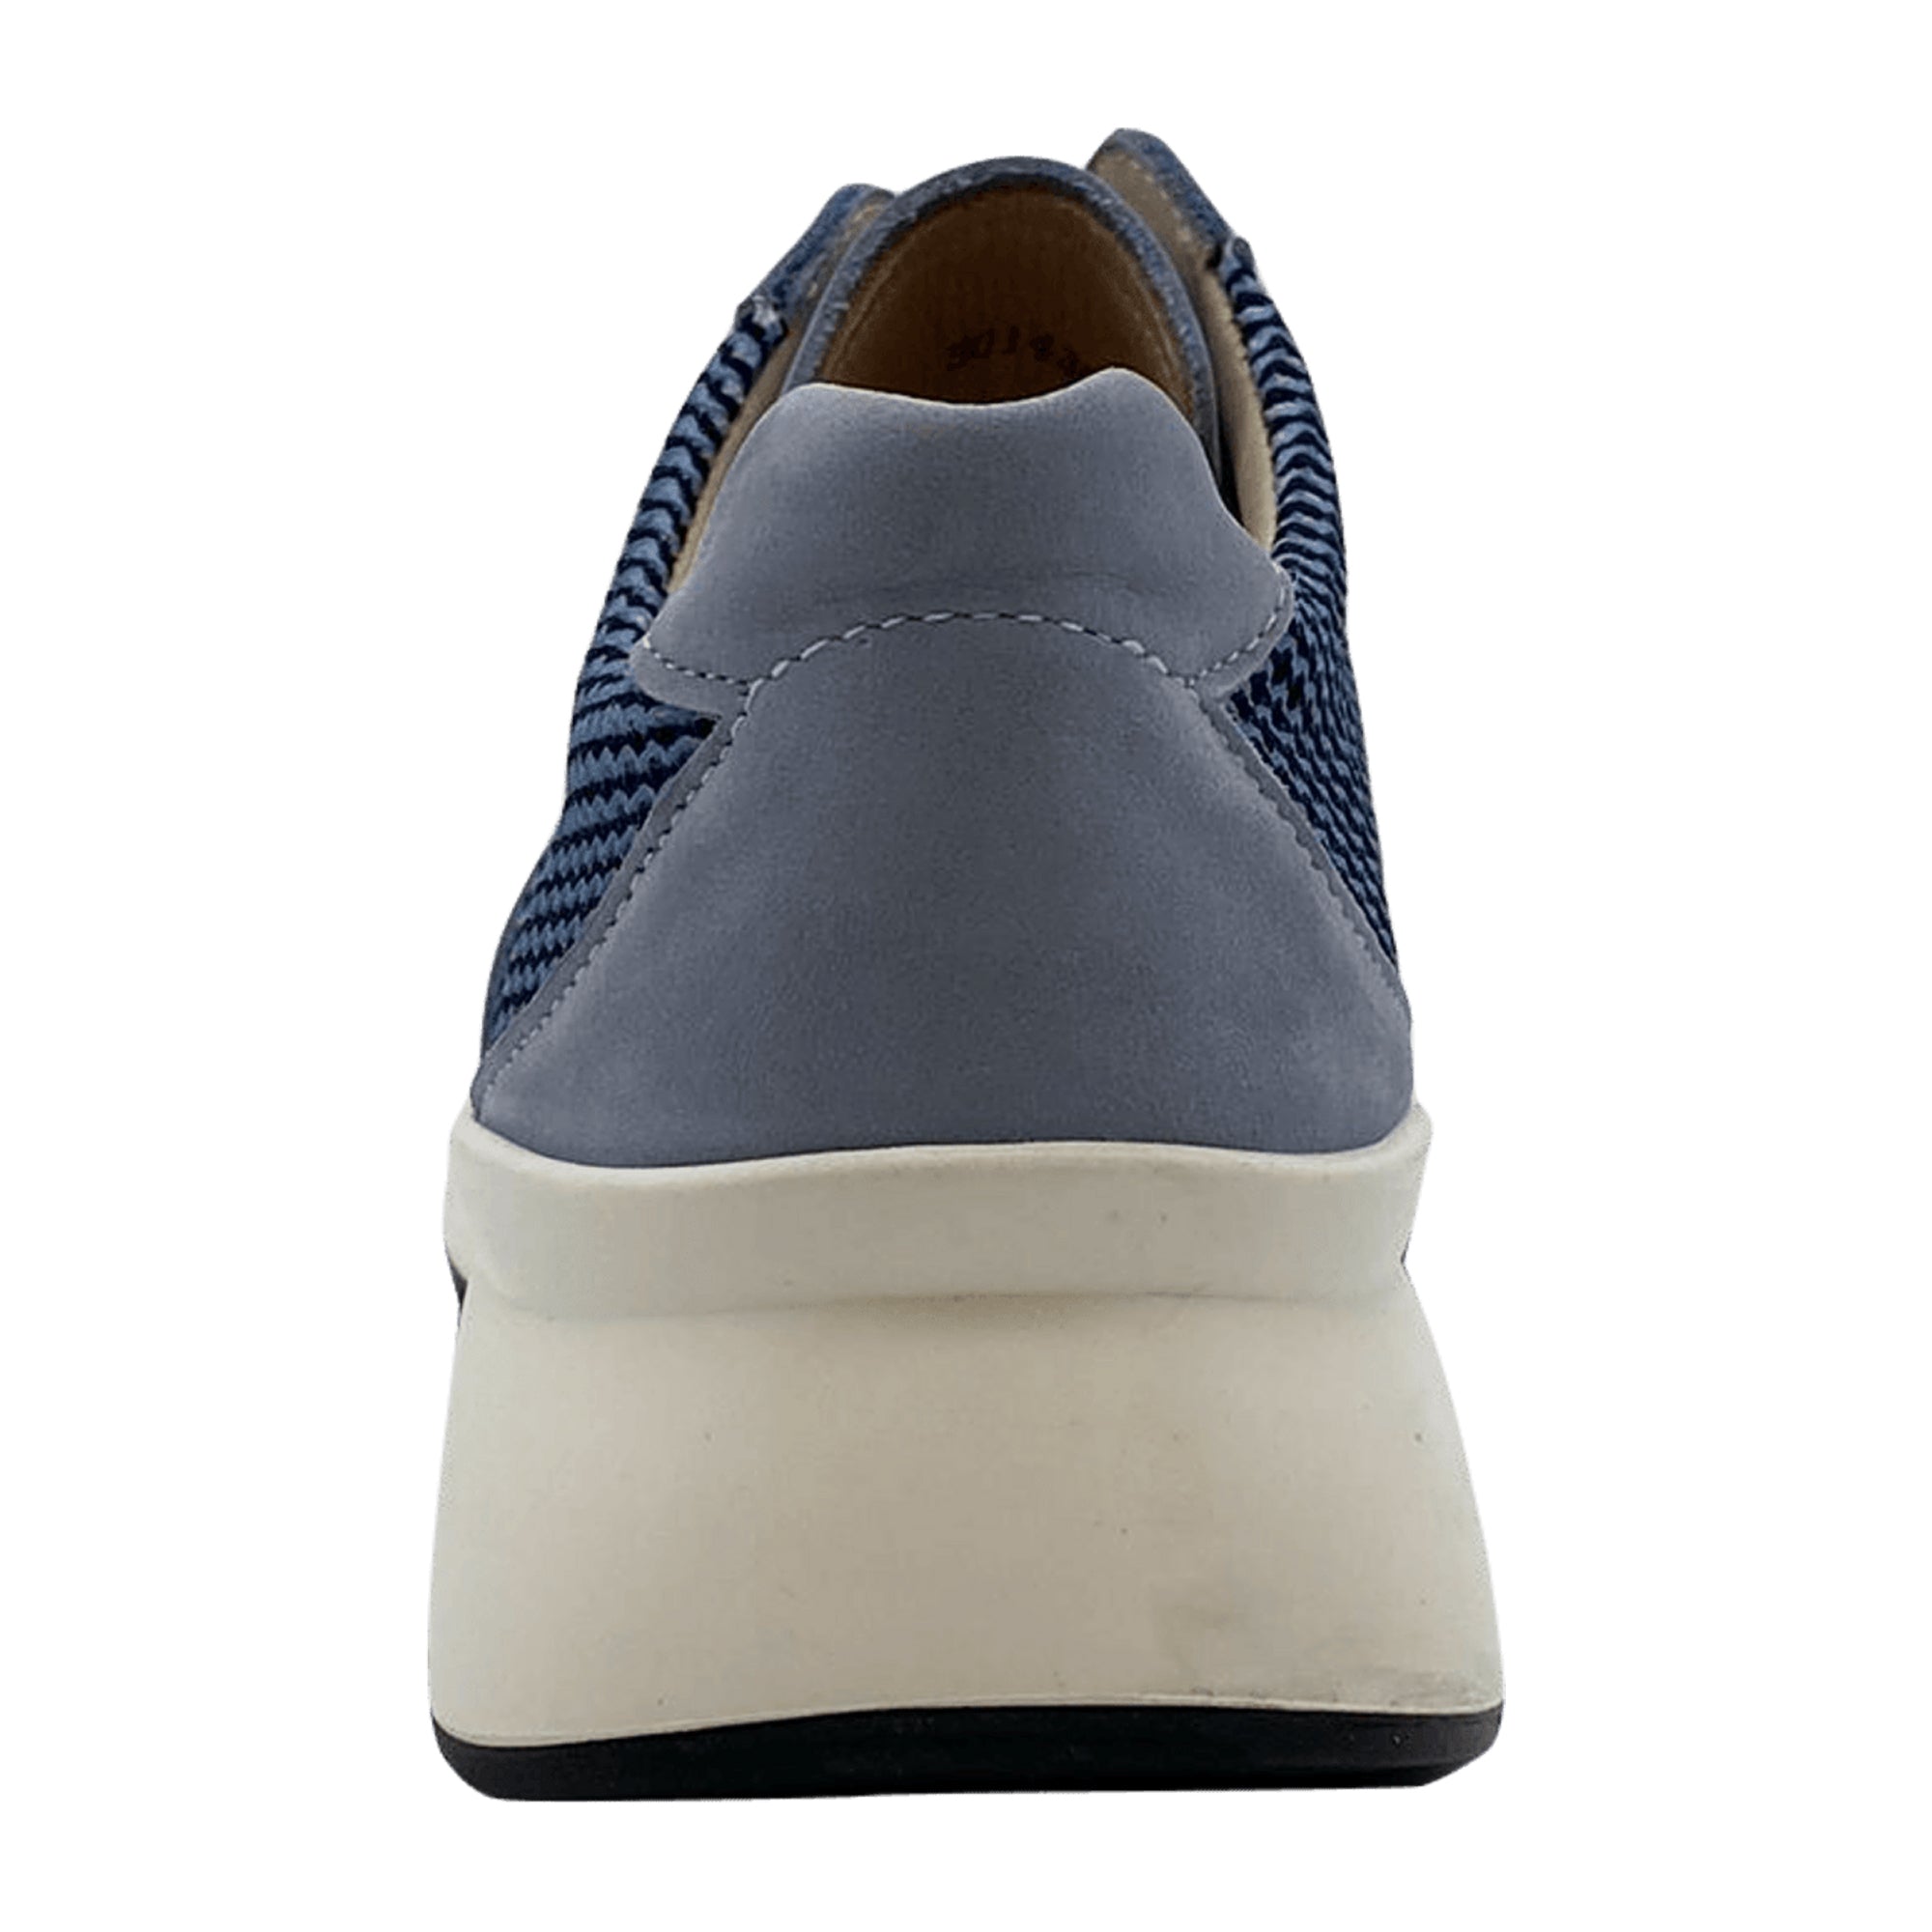 Finn Comfort Leganes Women's Comfort Shoes, Stylish Blue - Durable & Orthopedic Support